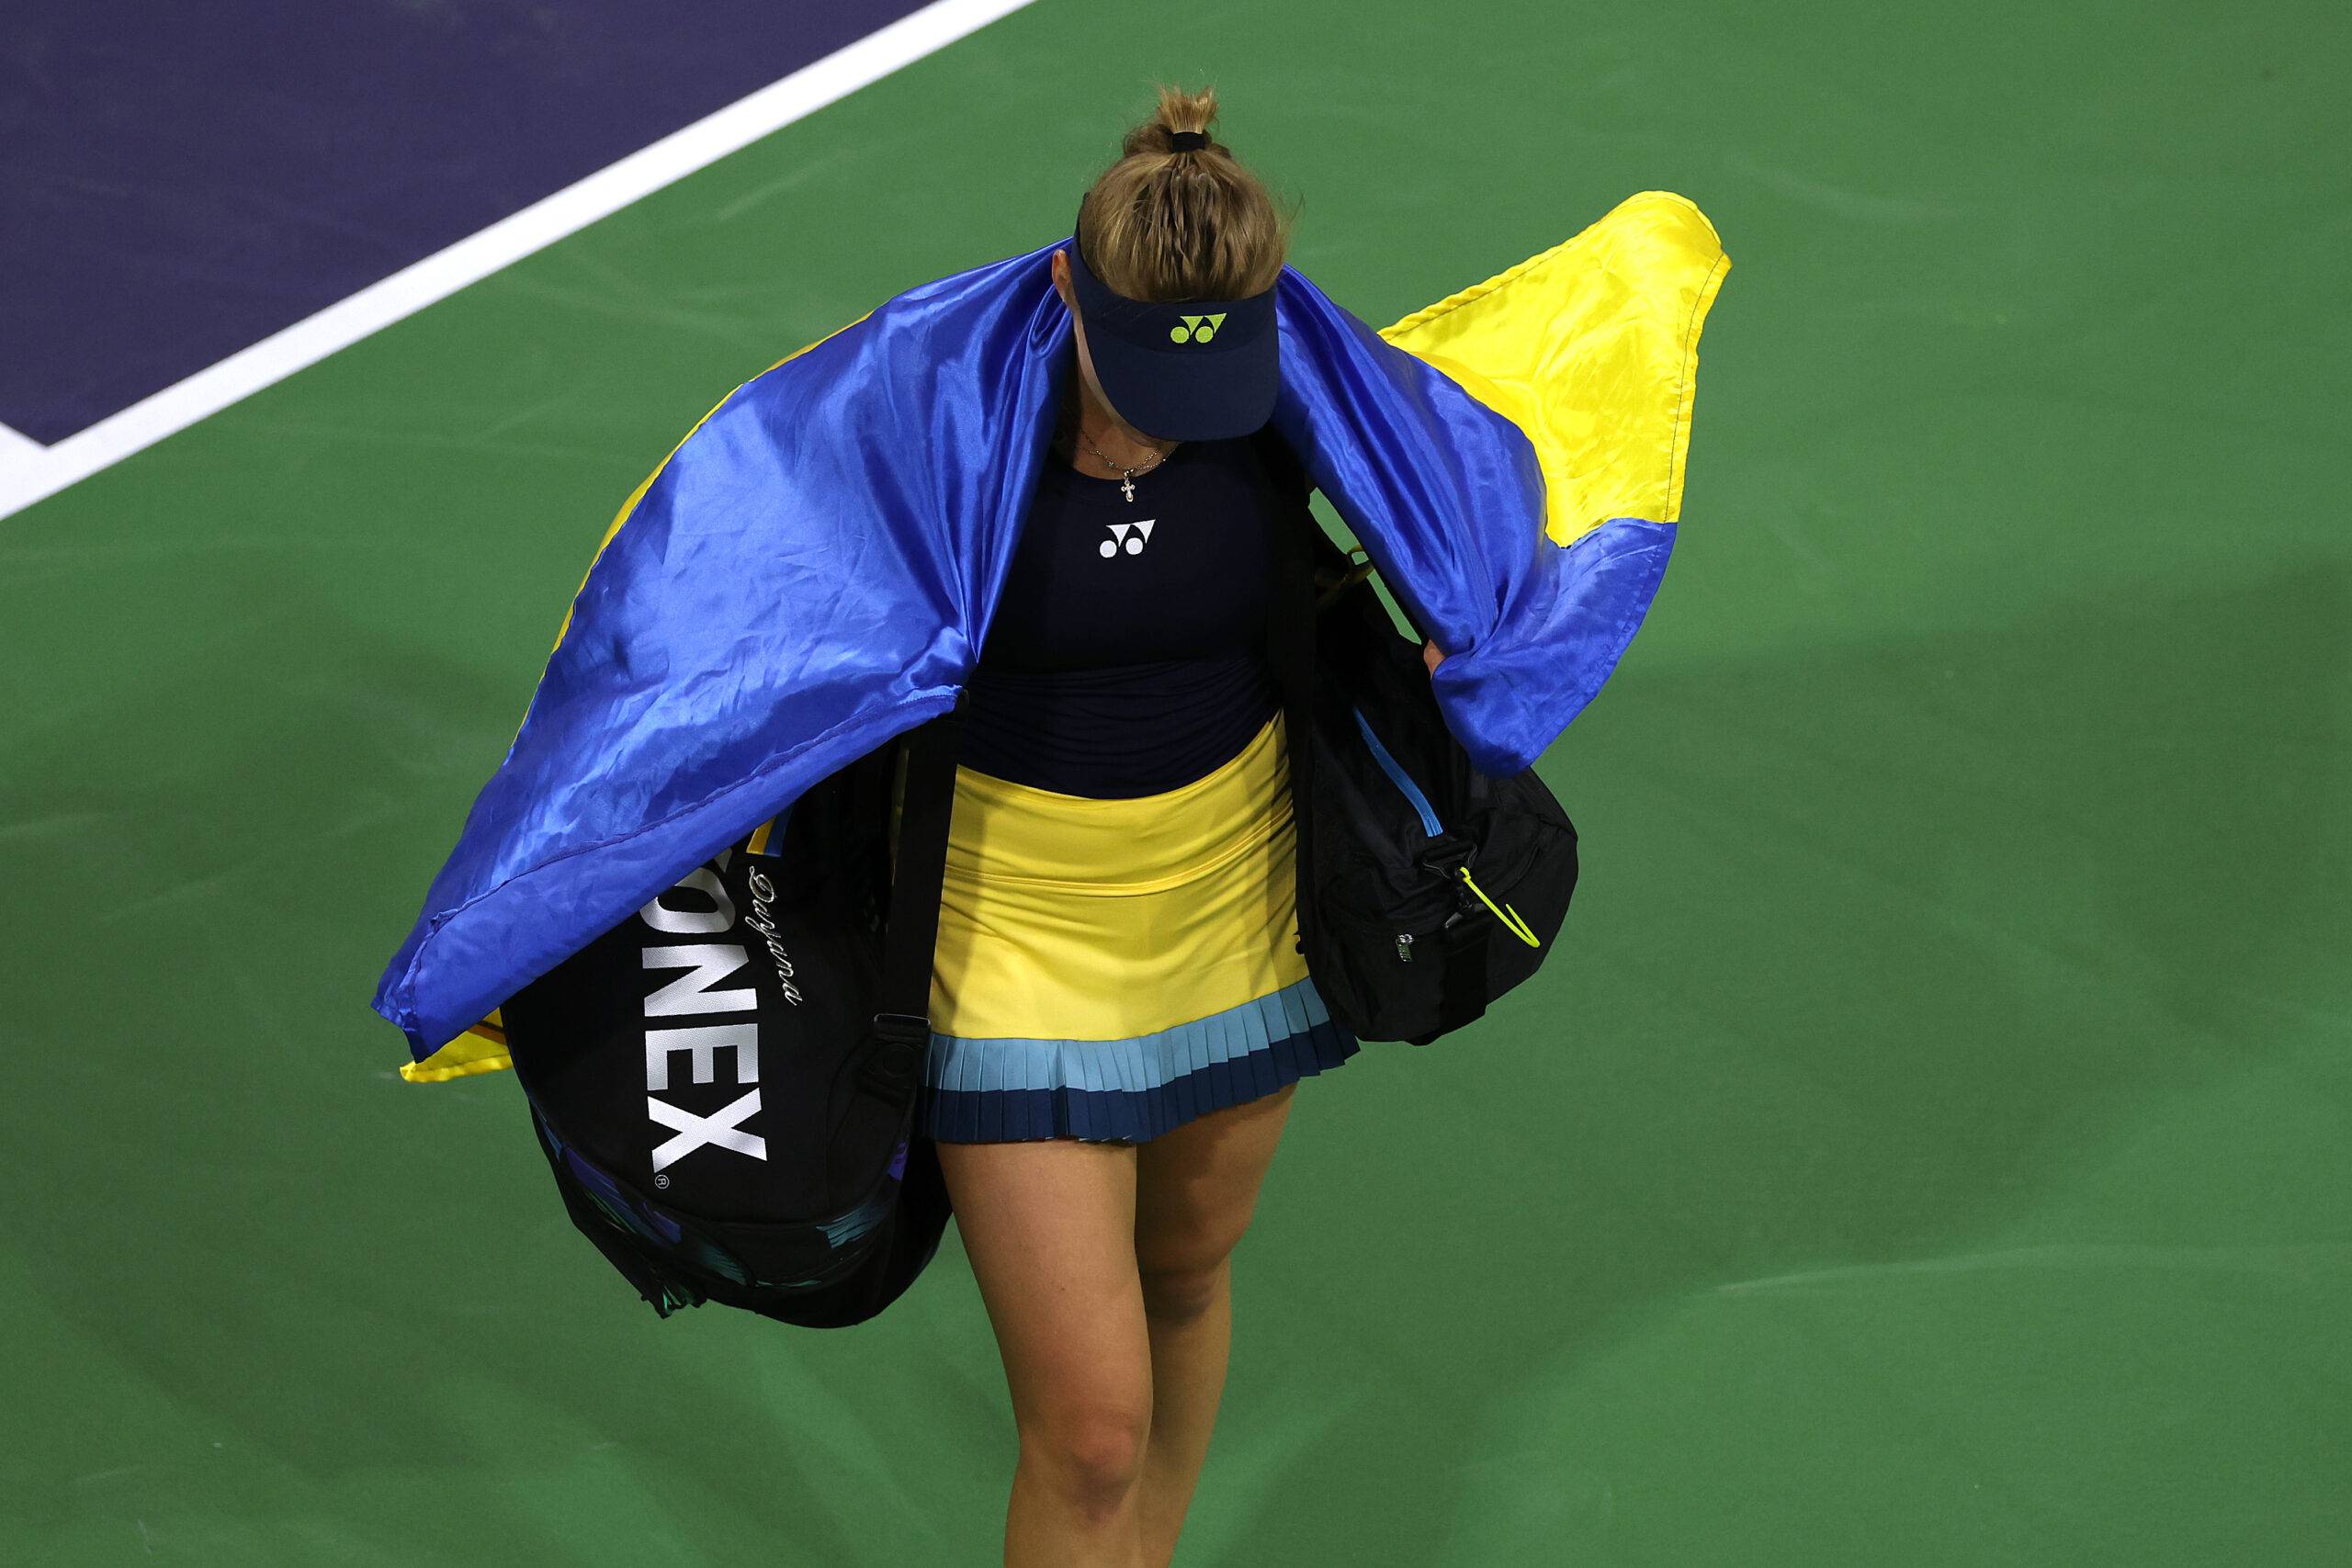 Ukrainian tennis player